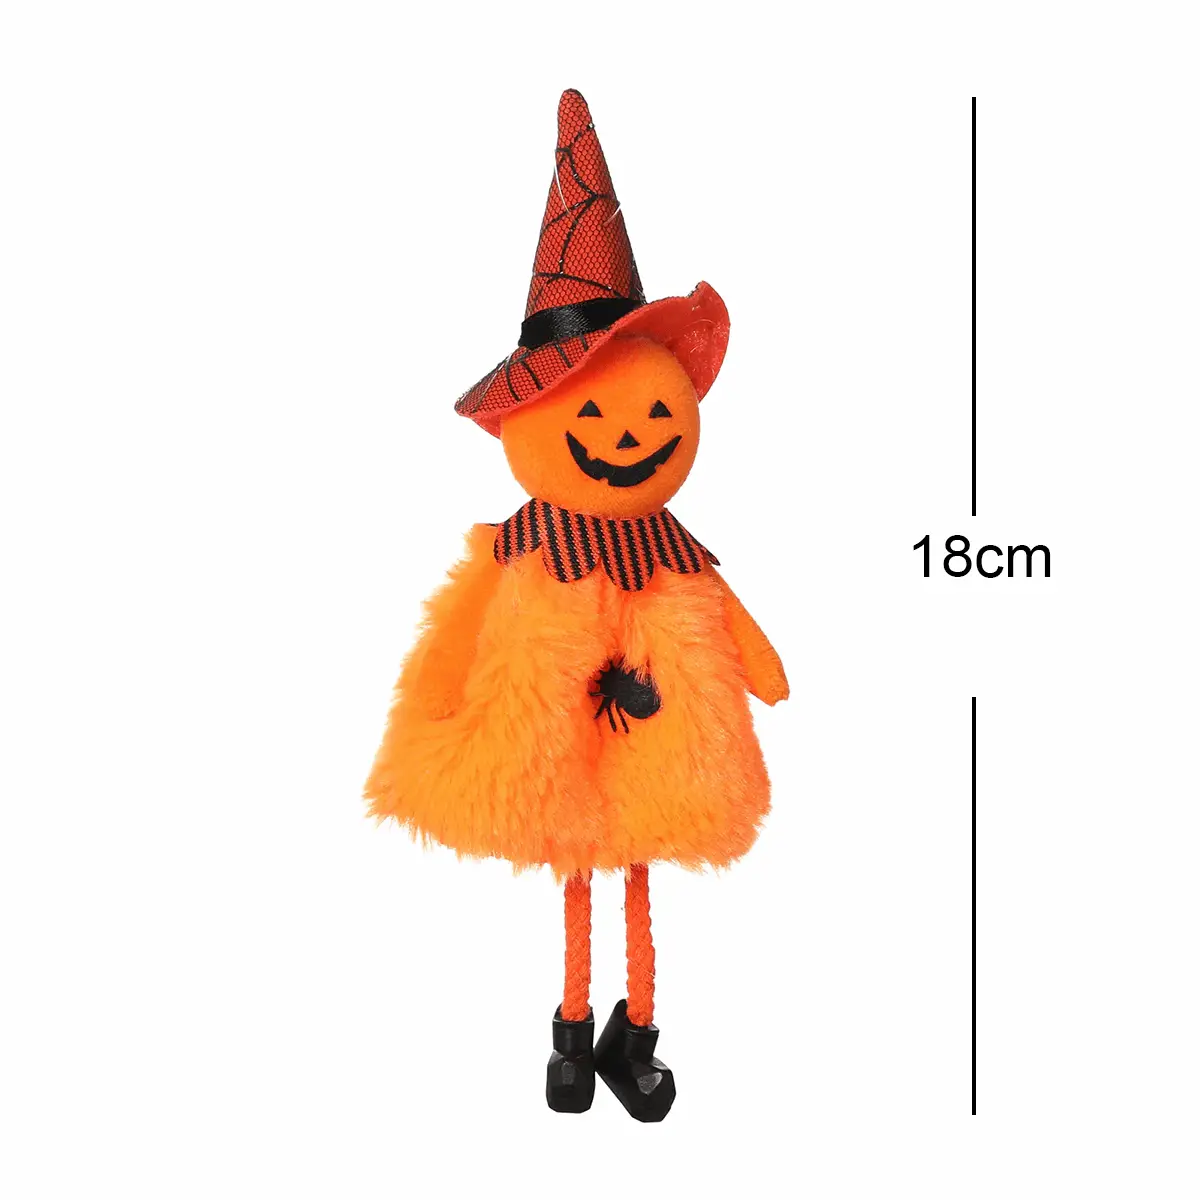 a stuffed animal wearing a halloween costume